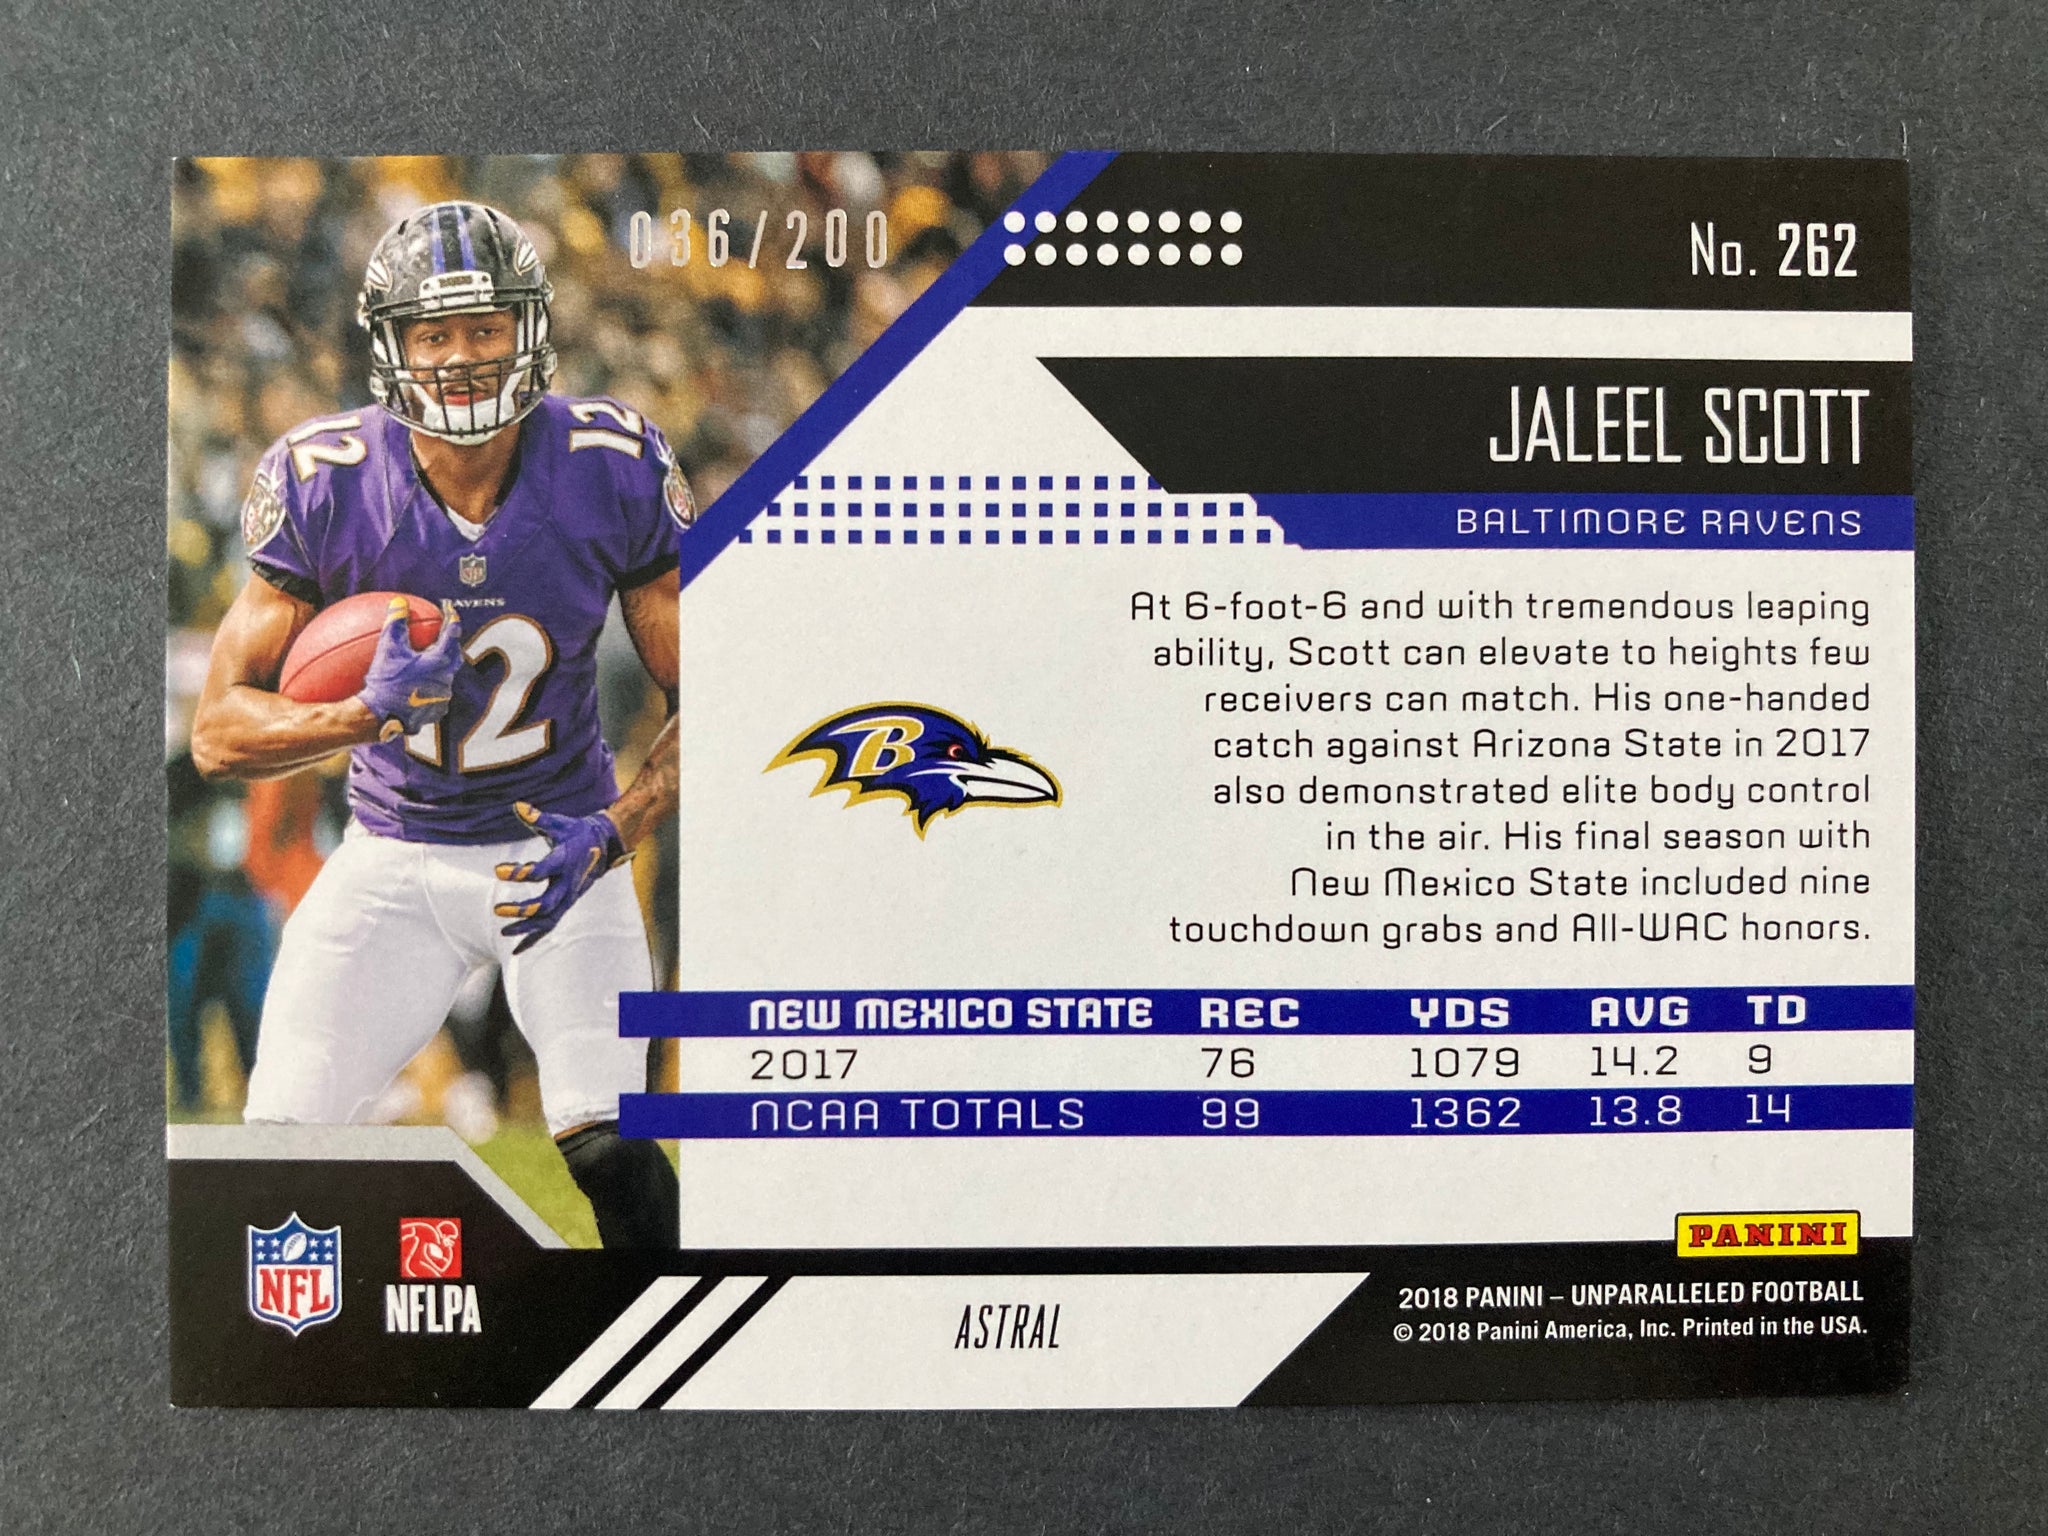 Jaleel Scott 2018 Panini Unparalleled RC #262 Baltimore Ravens NFL #d 36/200 Astral